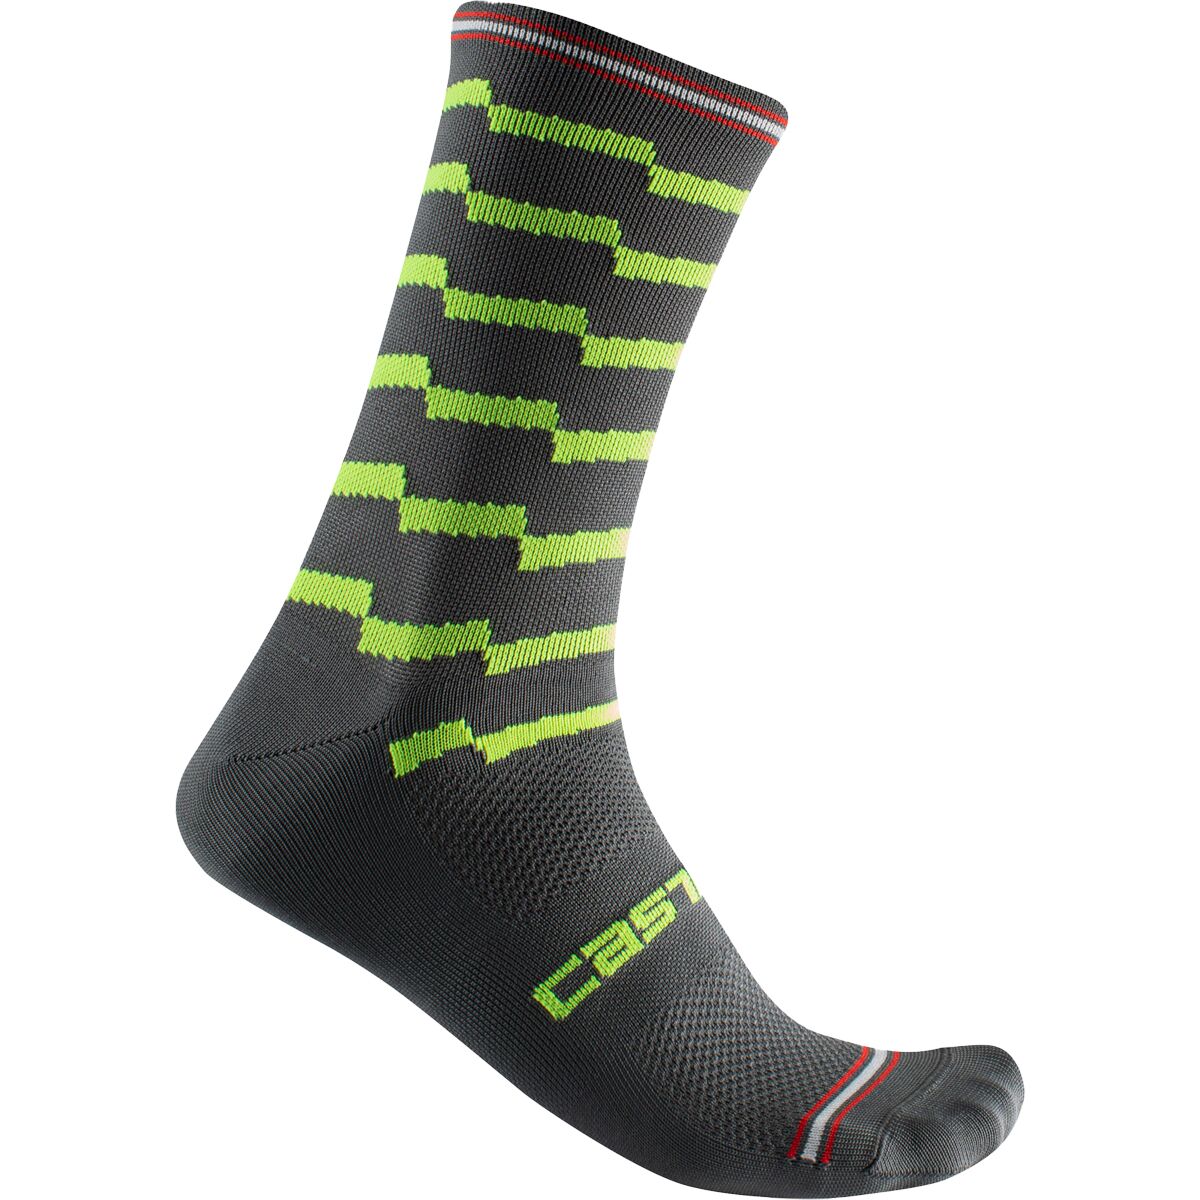 Castelli Unlimited 18 Sock - Men's Dark Gray/Electric Lime, L/XL